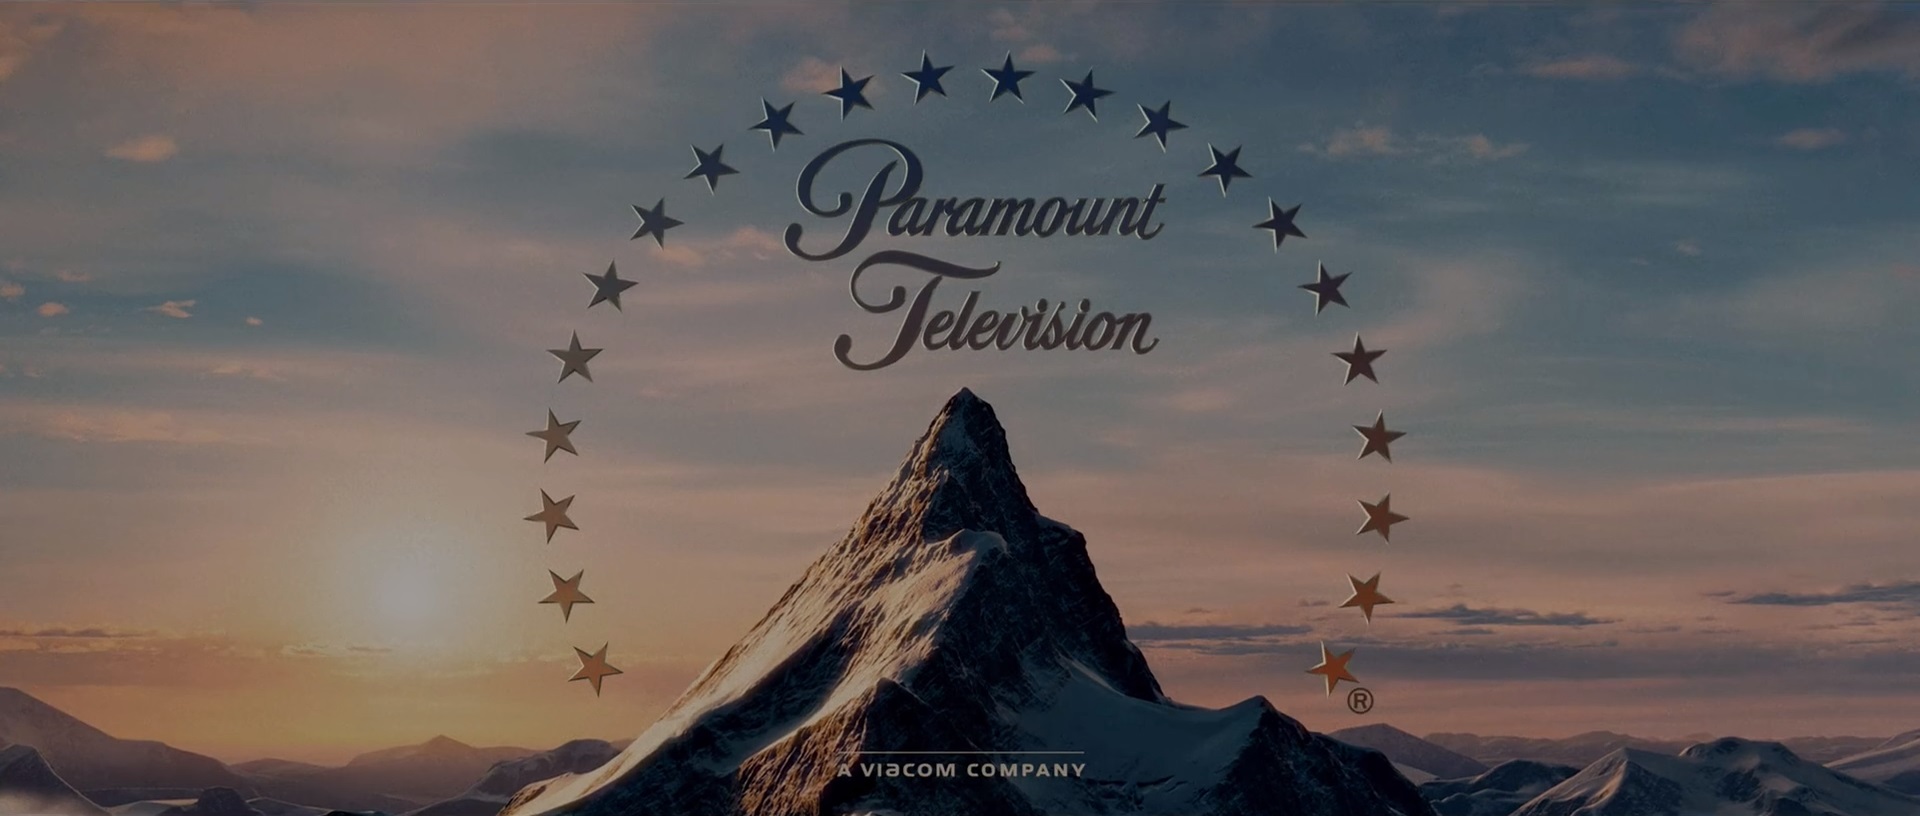 Paramount Television (2018) (2.35:1)